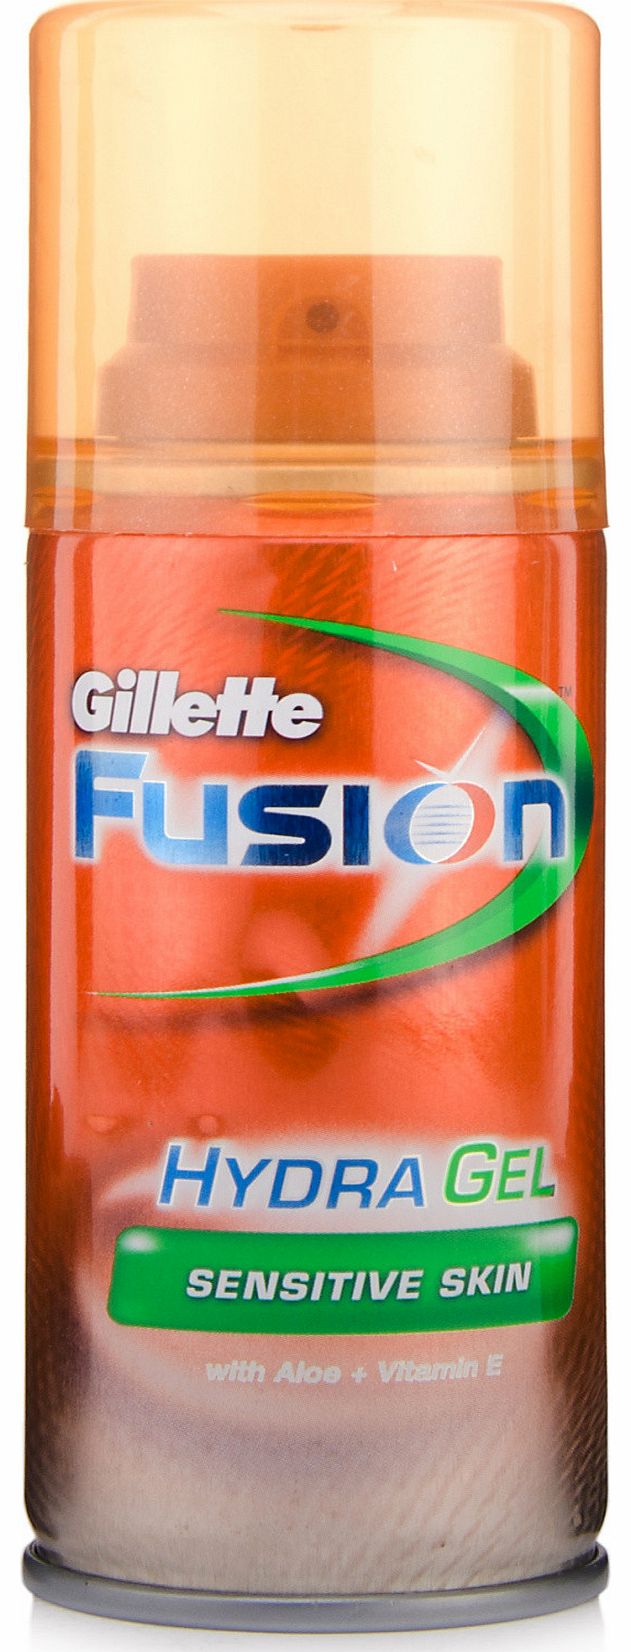 Gillette Fusion Hydra Gel Sensitive Skin Travel